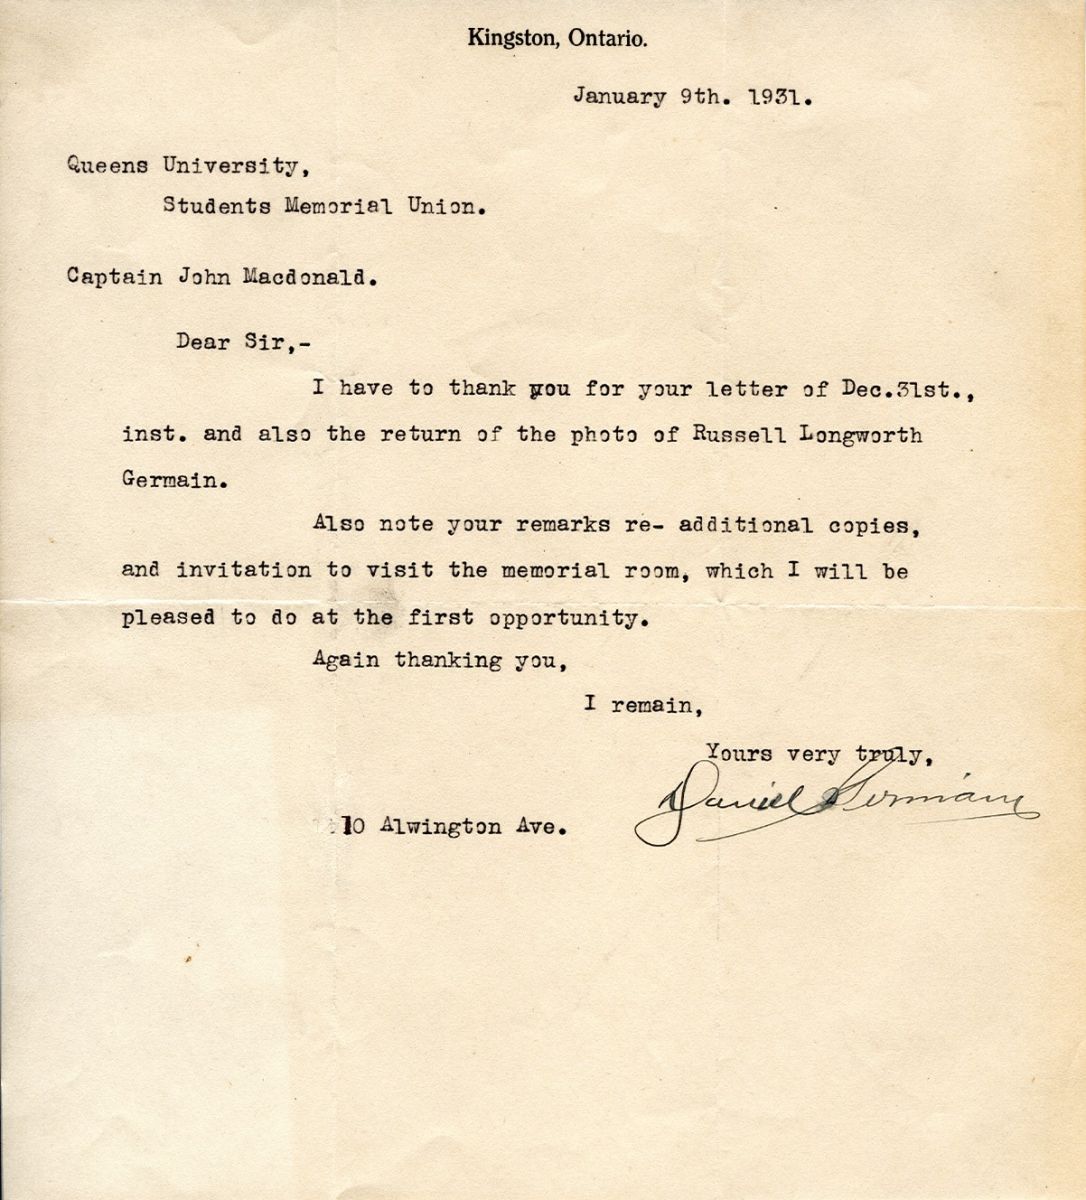 Letter from Daniel Germain to Capt. John MacDonald, 19th January 1931